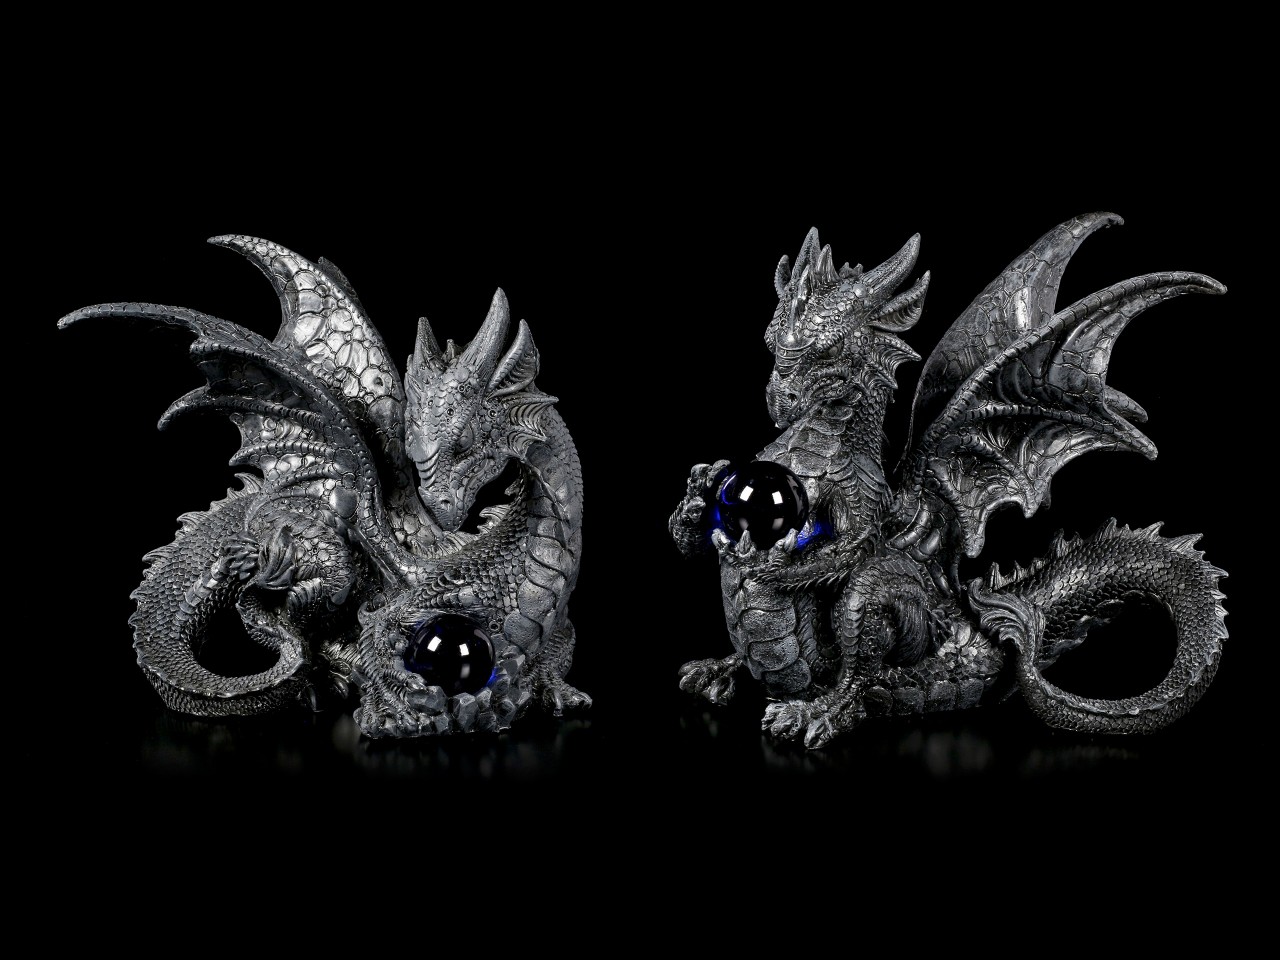 Black Dragon Figurines with Glass Ball - Set of 2